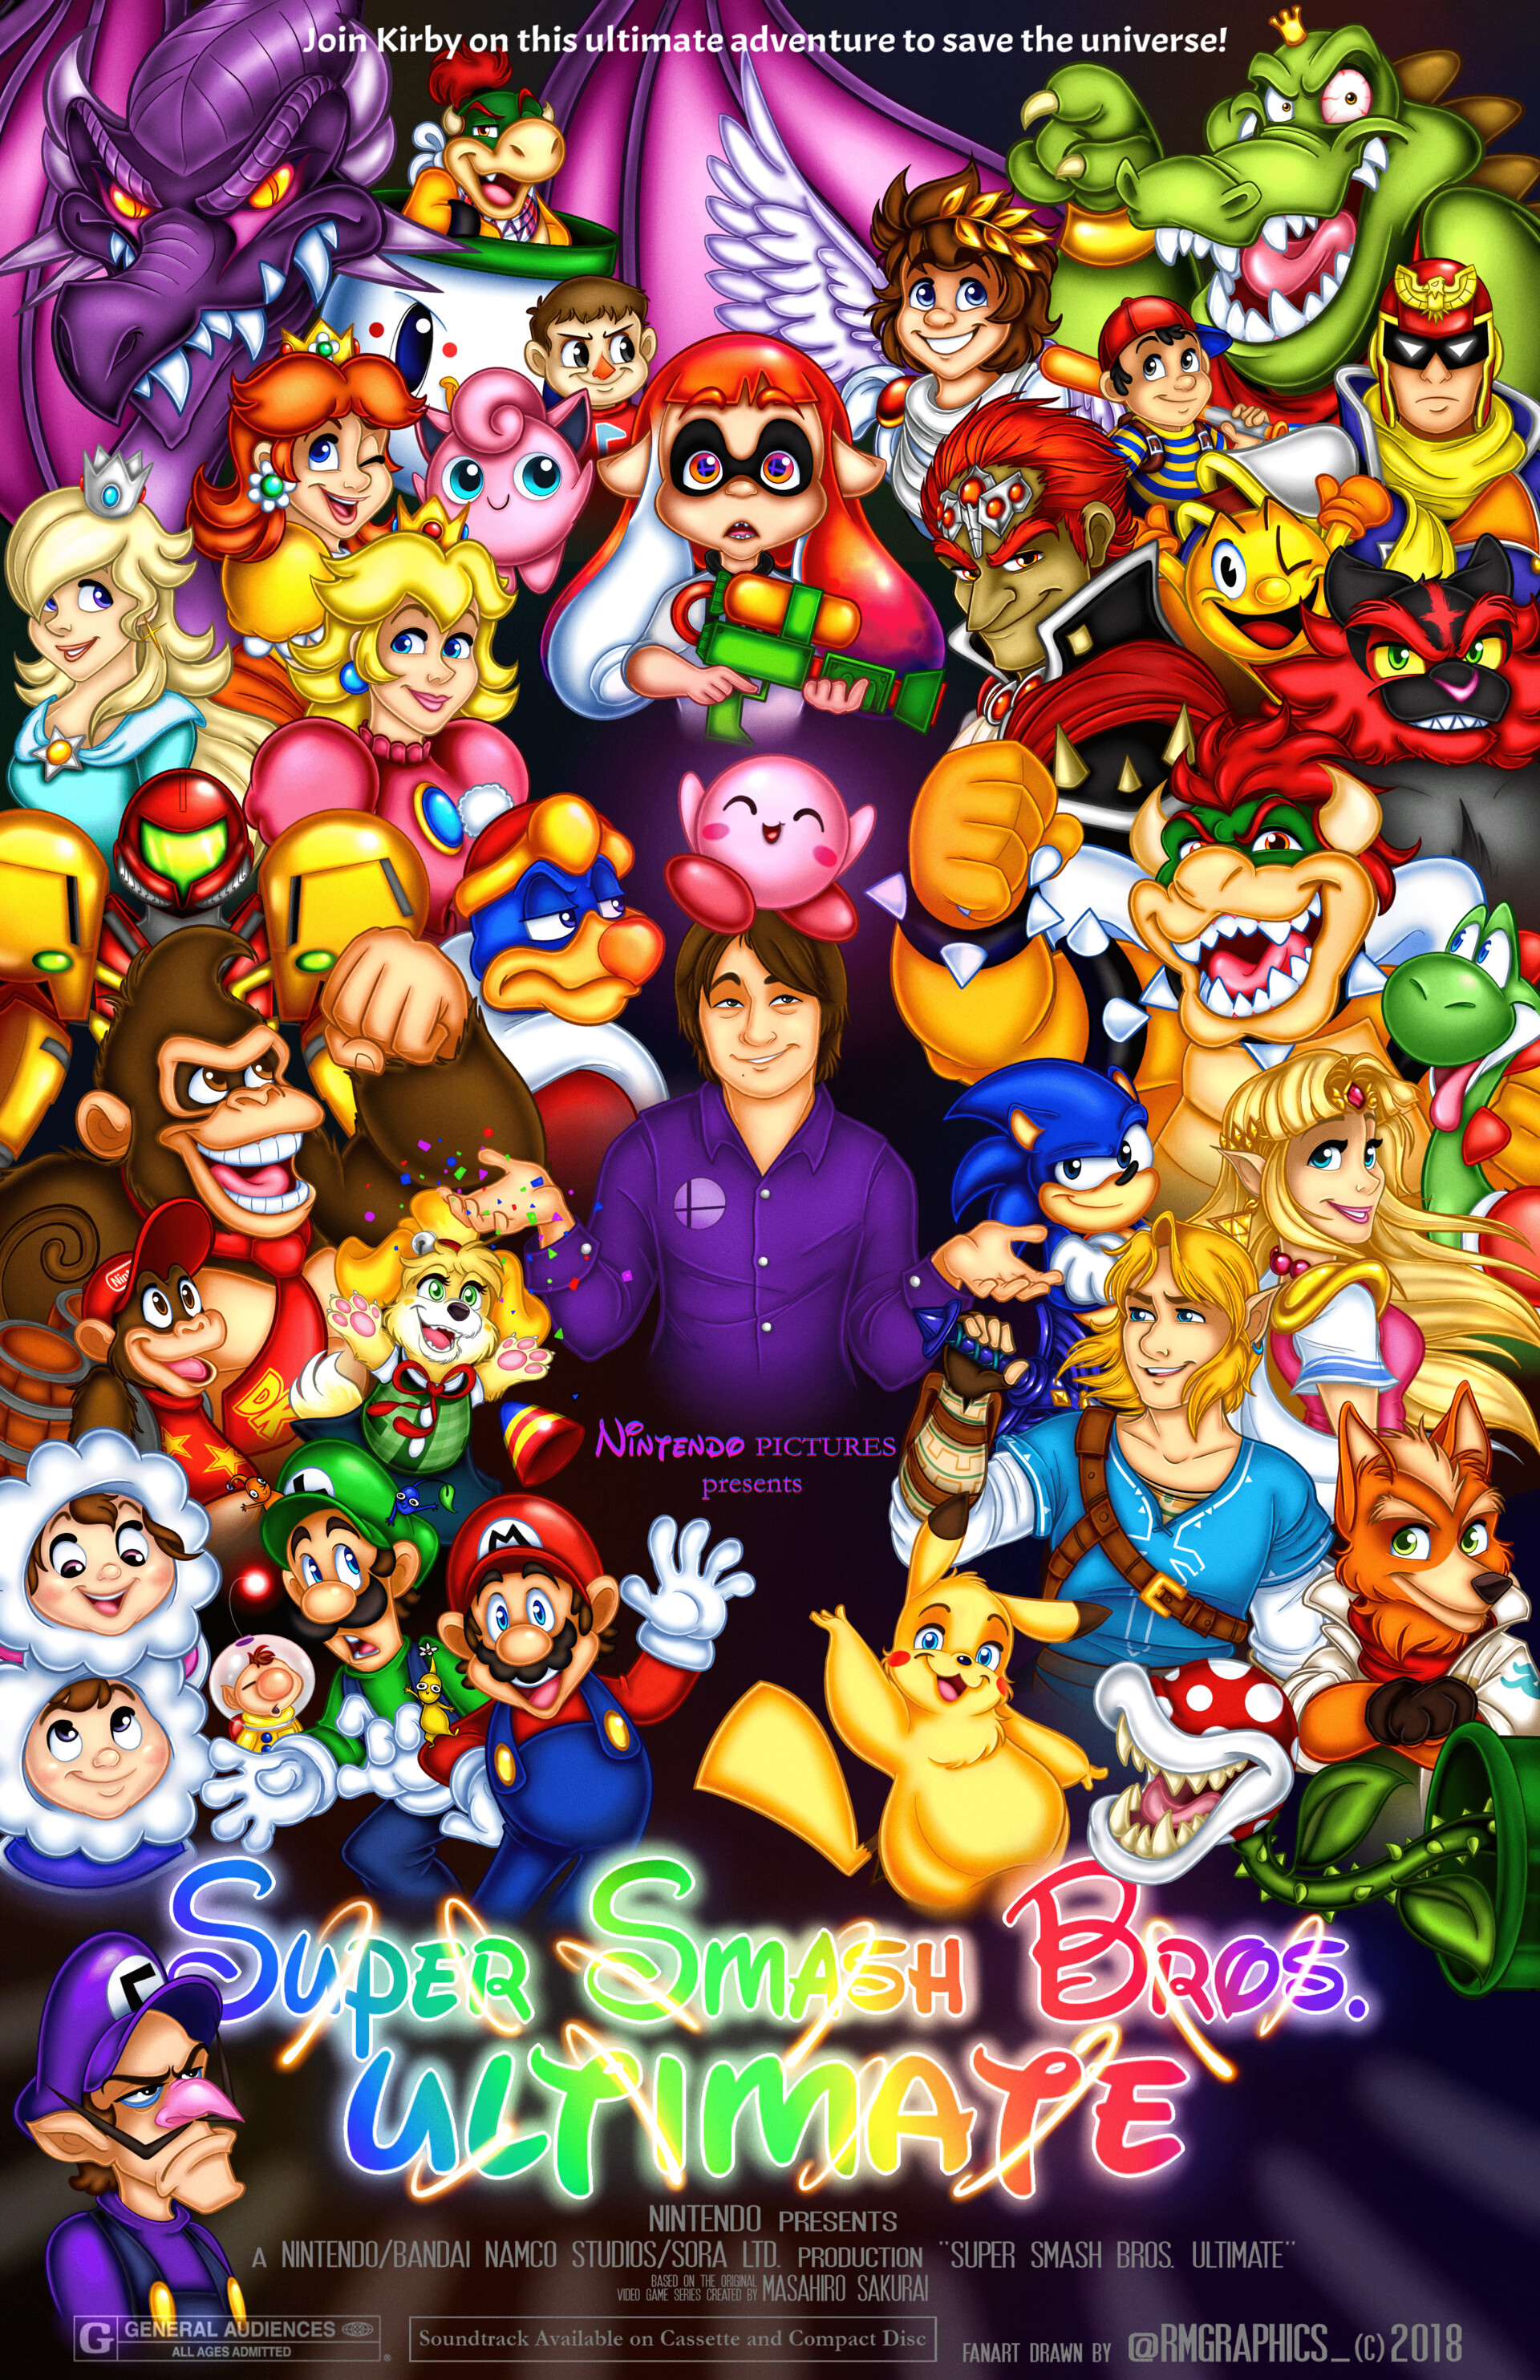 ArtStation - Super Smash Bros. Ultimate - Disney-styled Poster